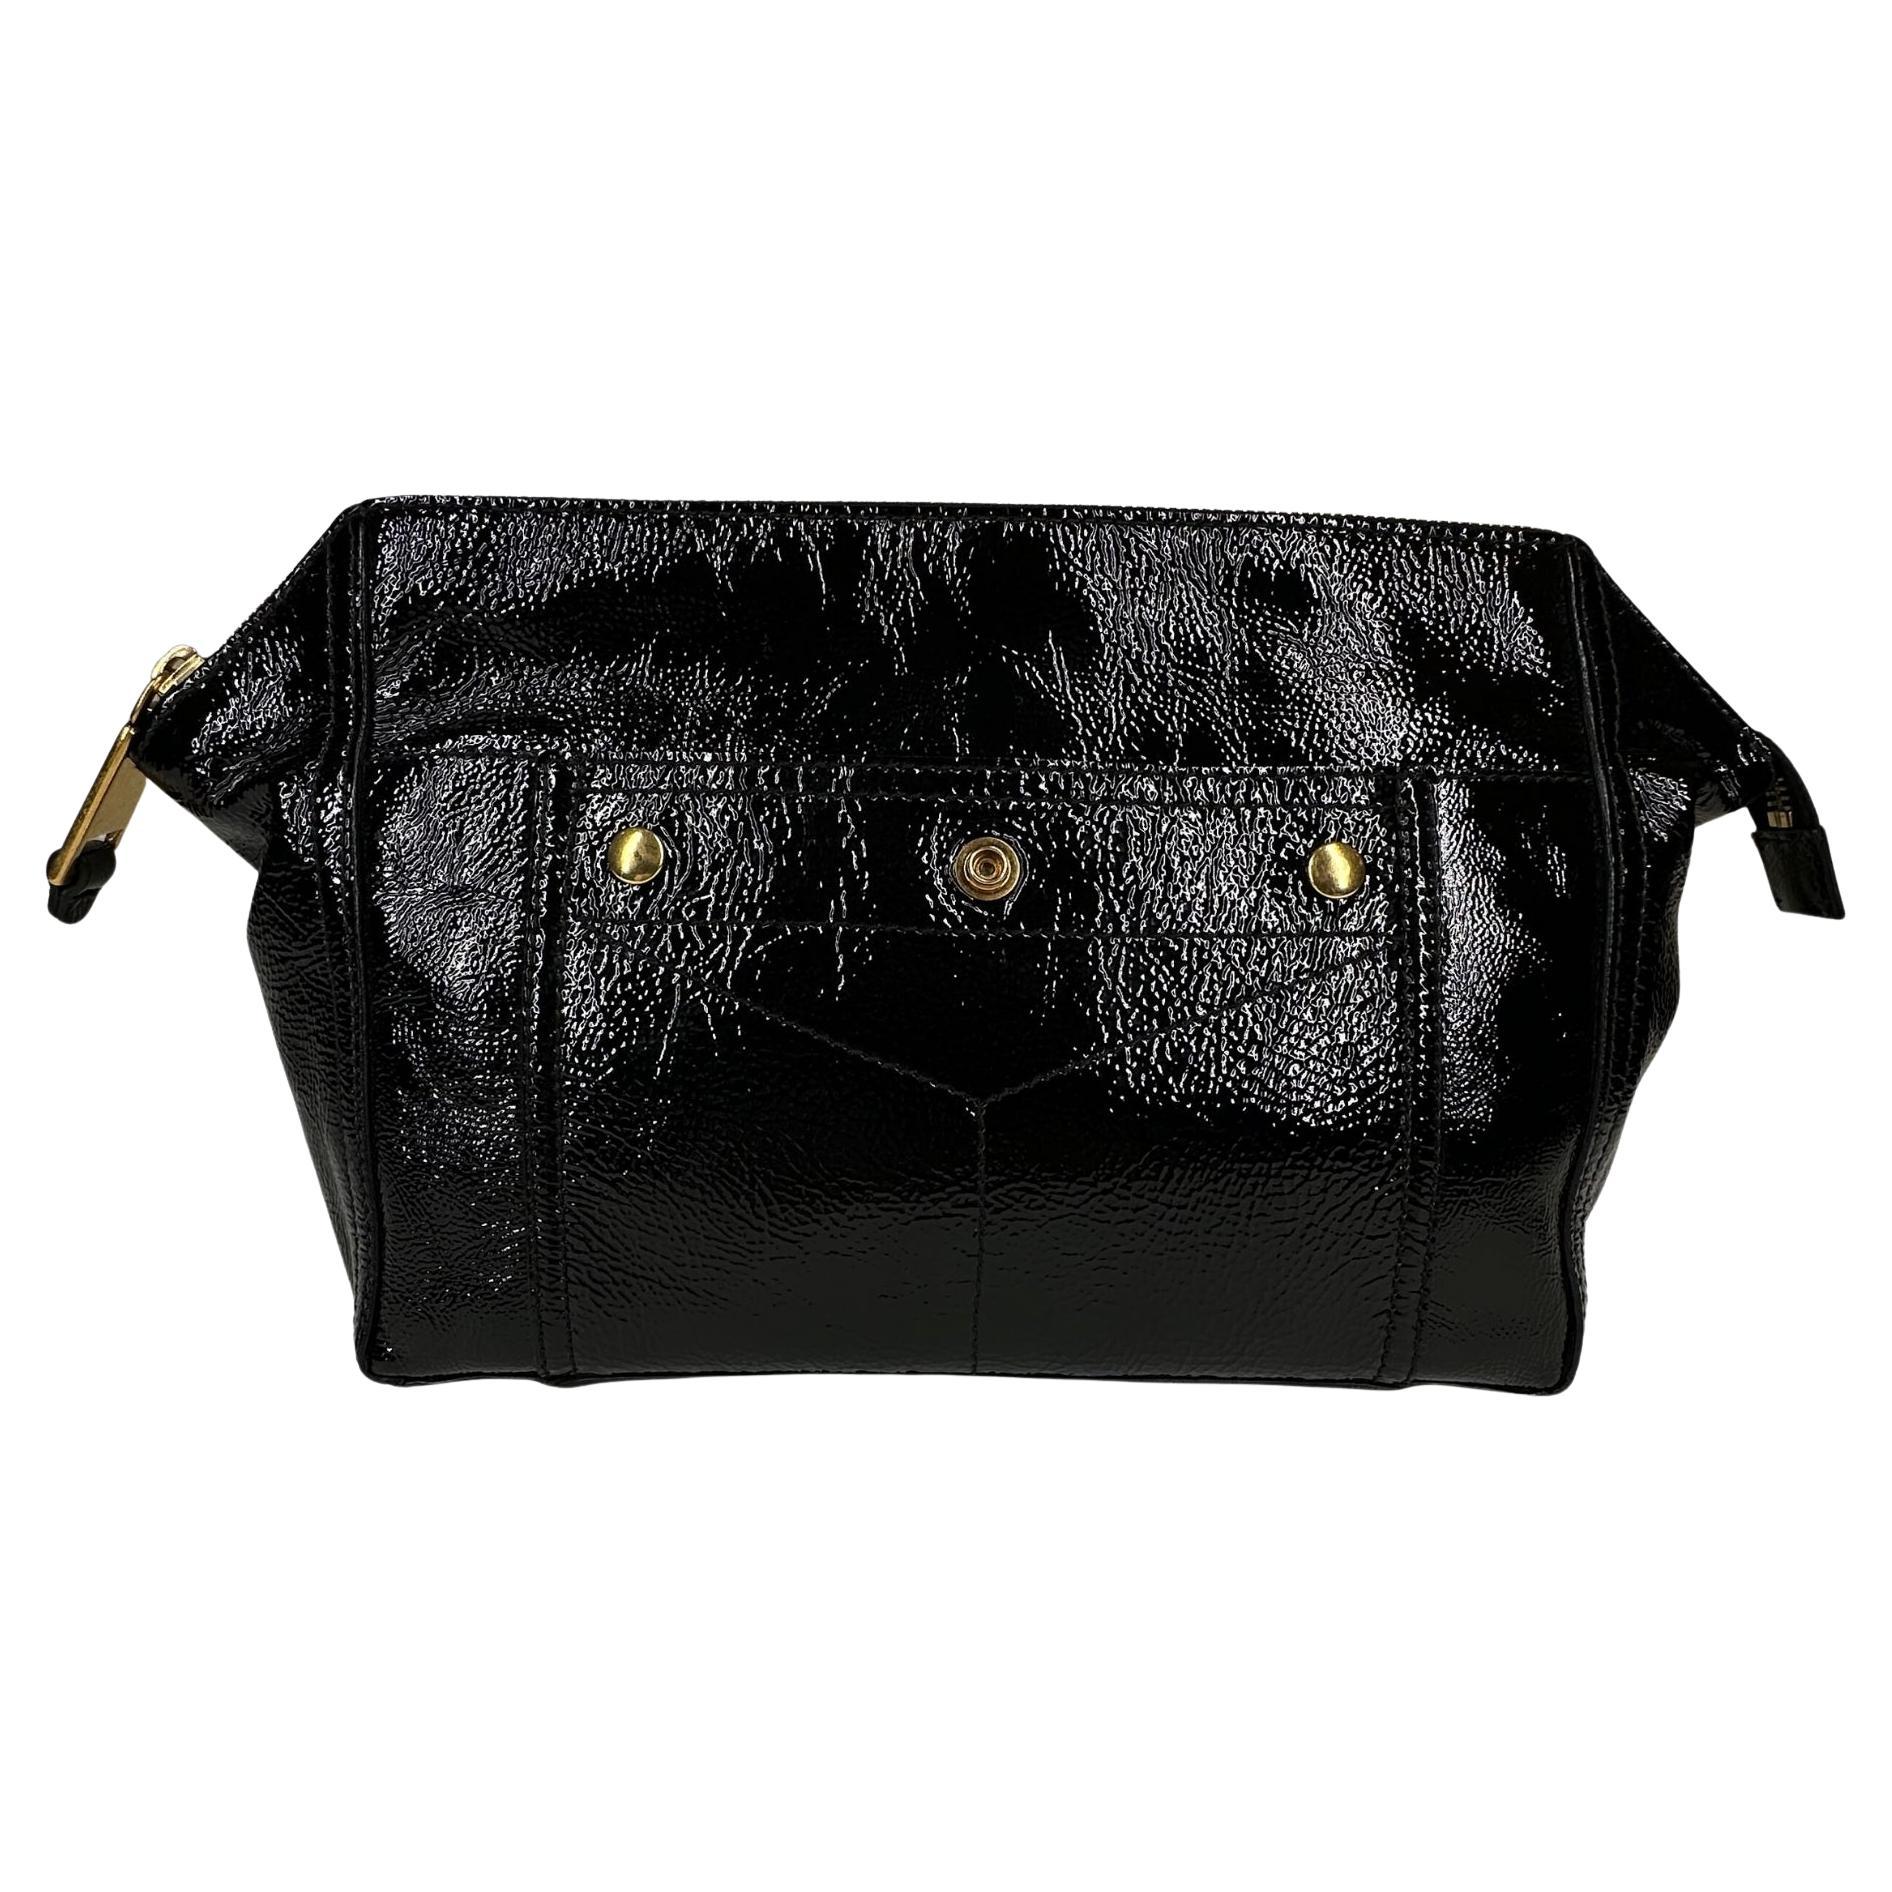 Yves Saint Laurent Vintage Distressed Leather Black Cosmetic Bag For Sale